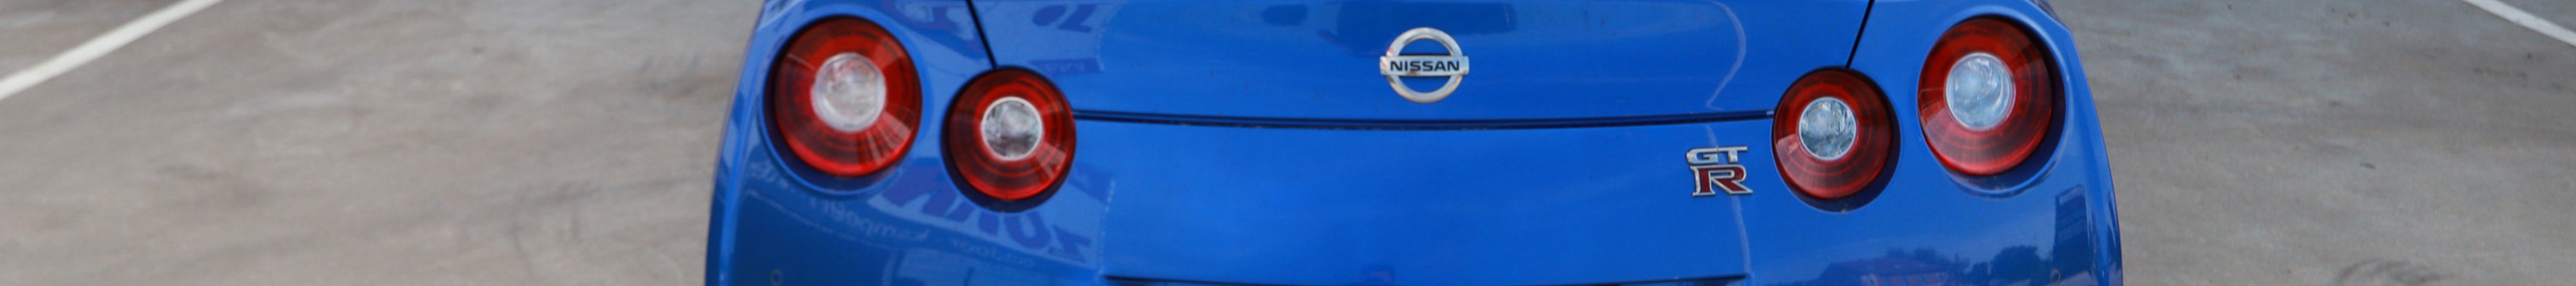 Nissan GT-R 2021 Track Edition